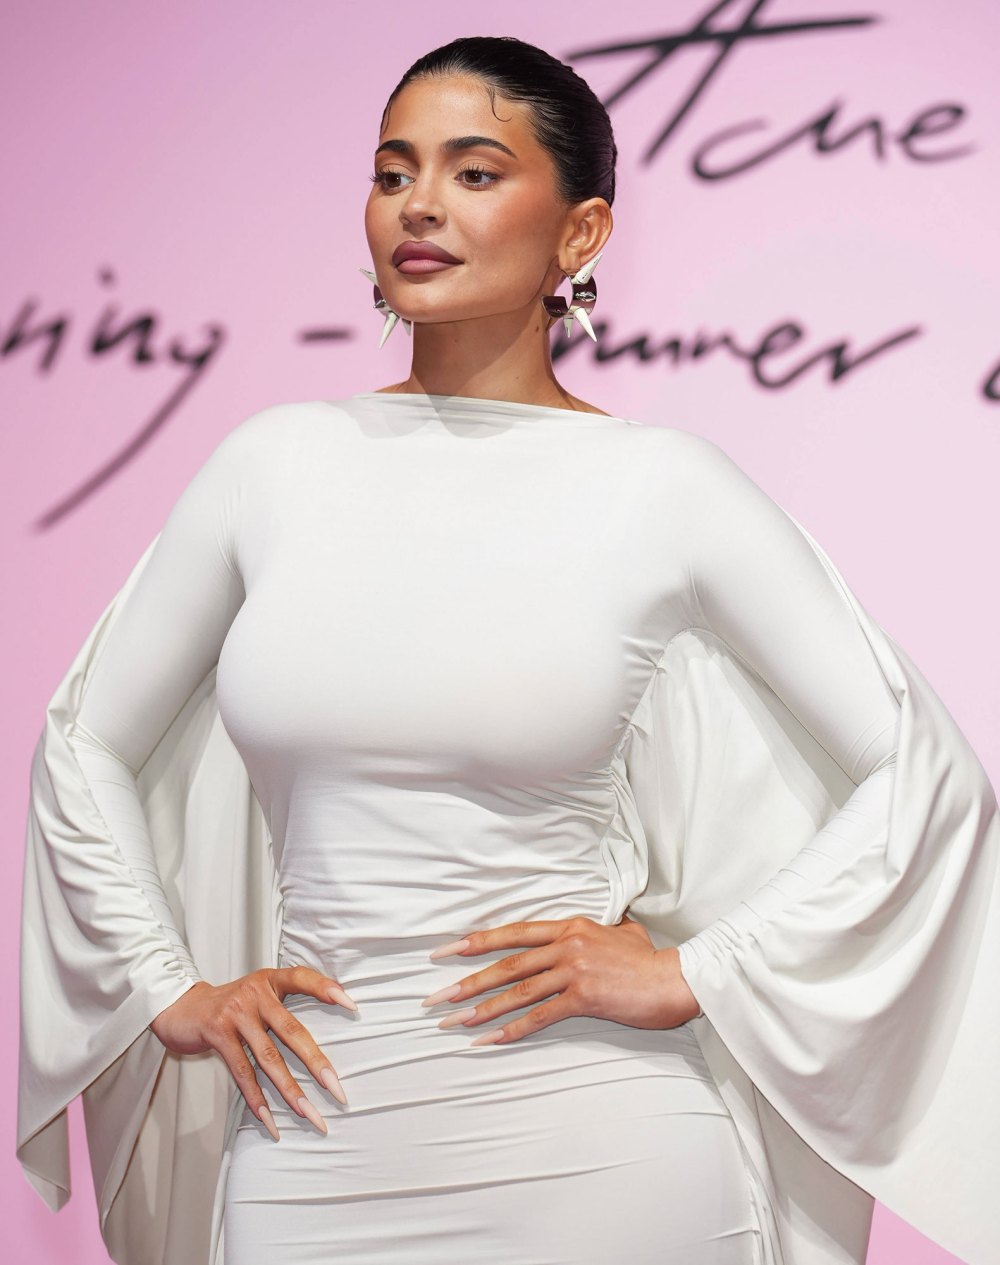 Kylie Jenner Details 'Painful' Postpartum Depression After Both Pregnancies White gown